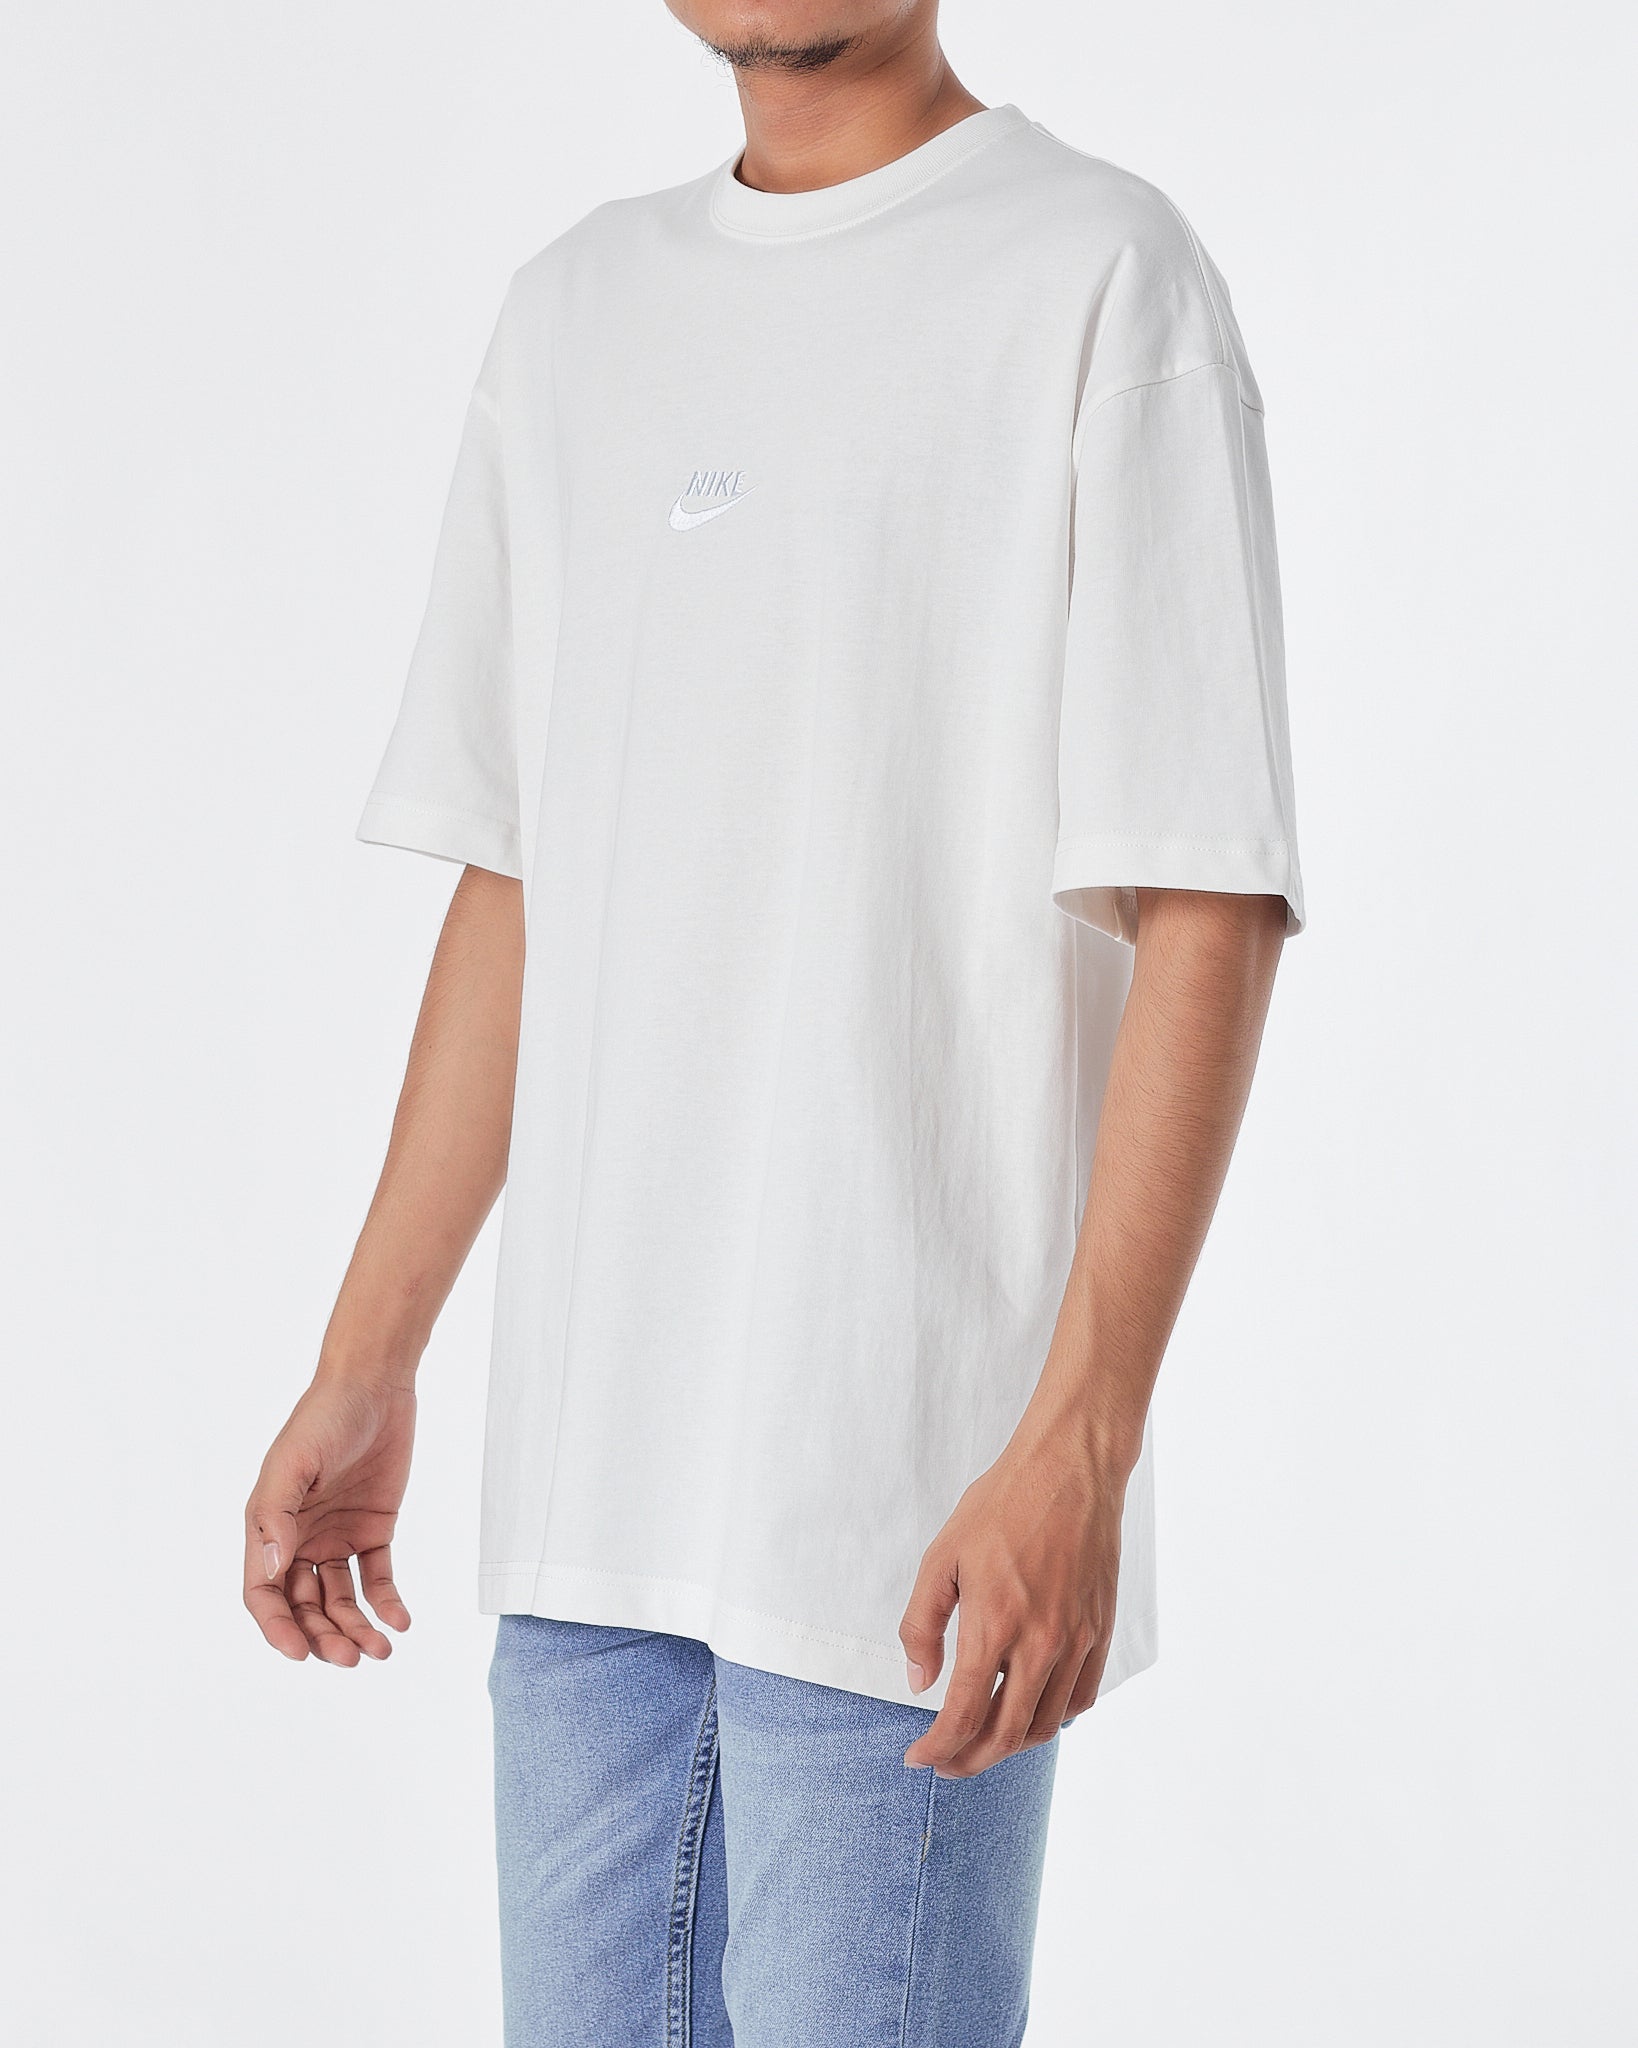 NIK Logo Embroidered Men White T-Shirt 16.90